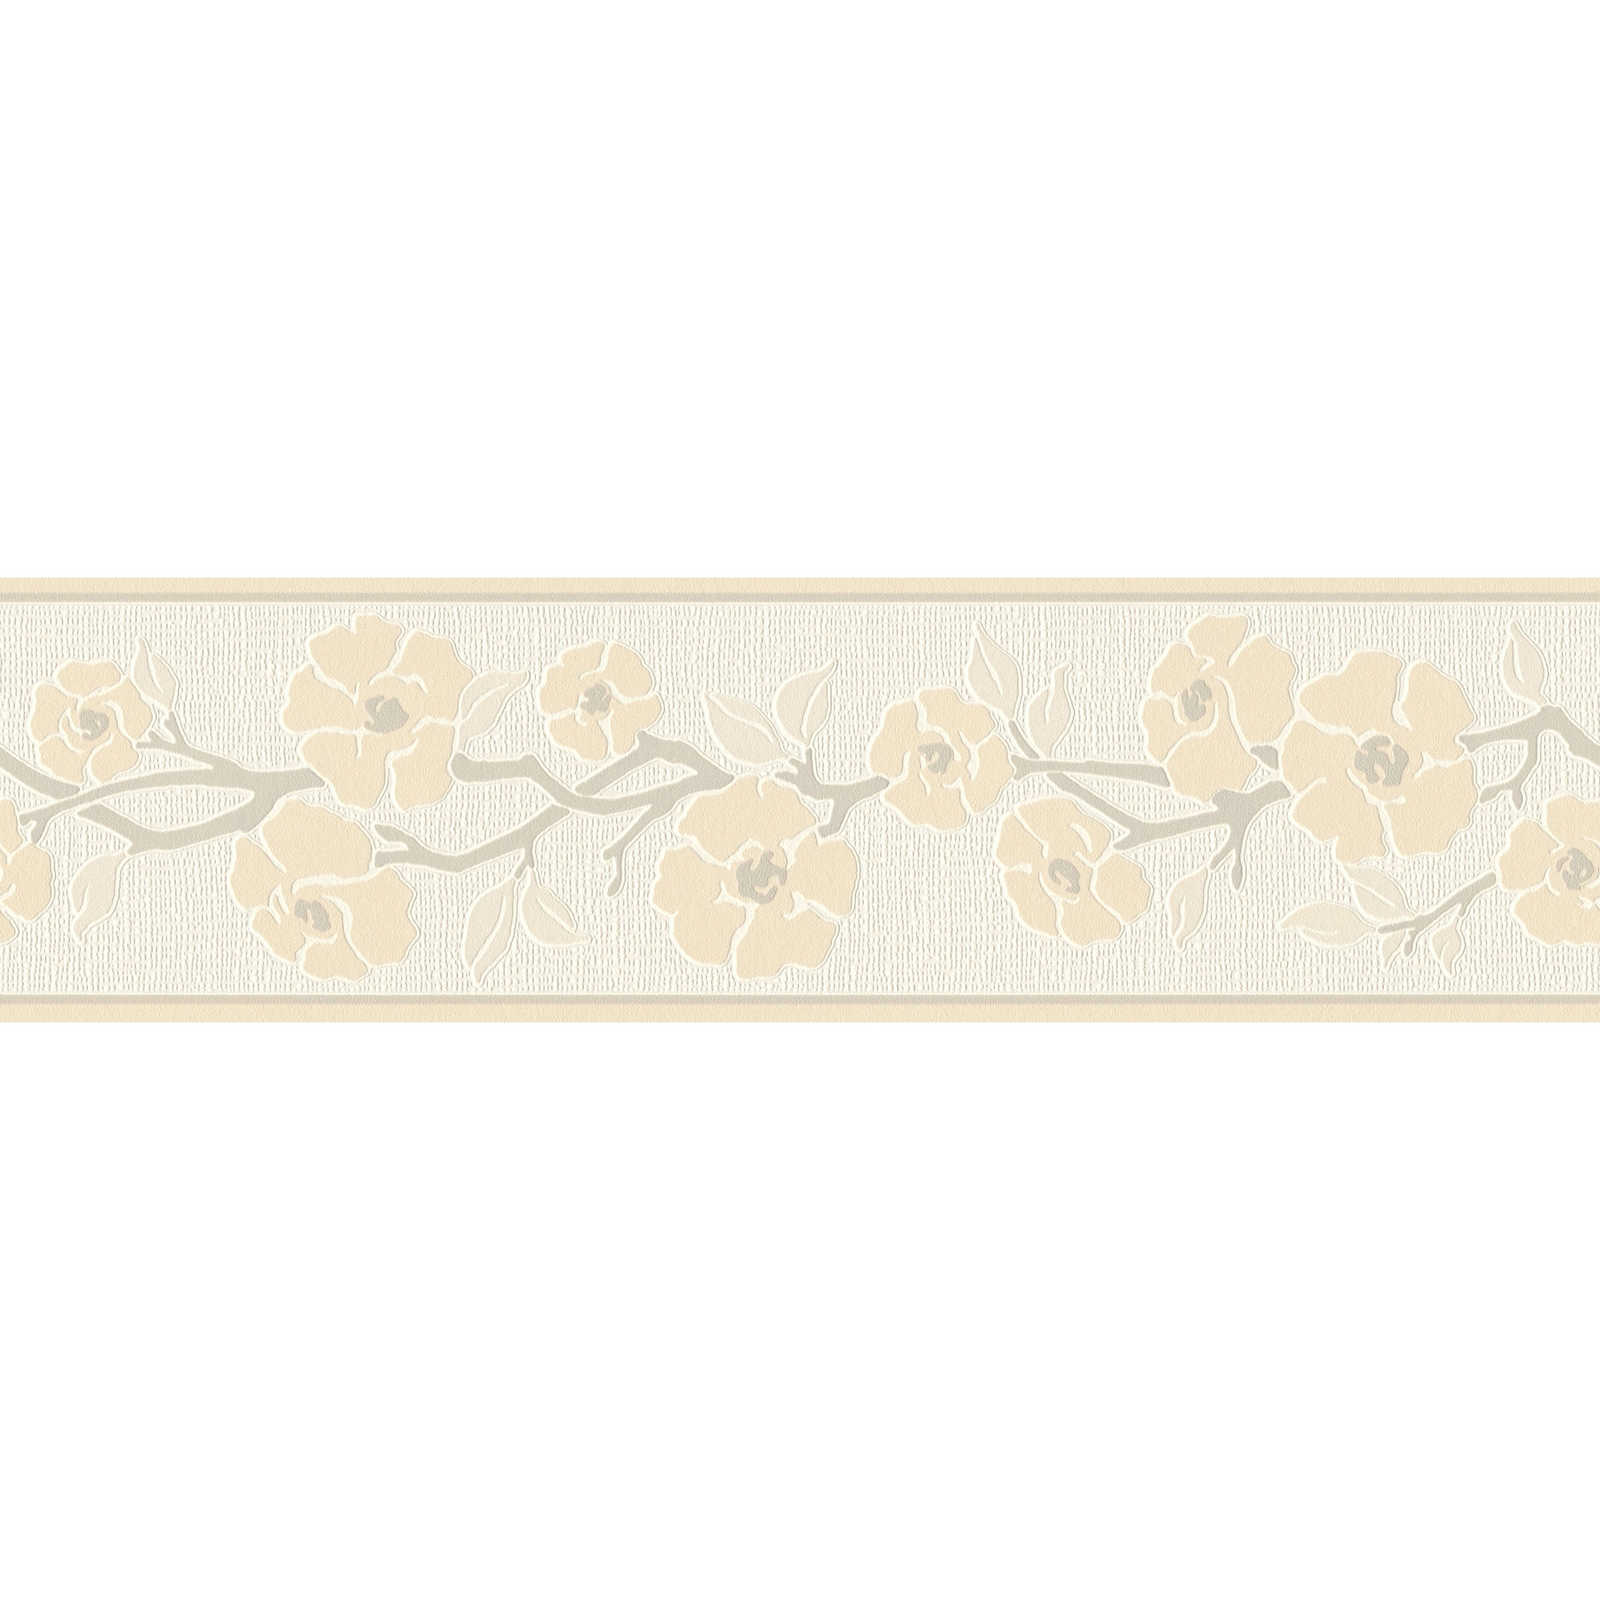         Flowers border self-adhesive with nature design - cream, beige
    